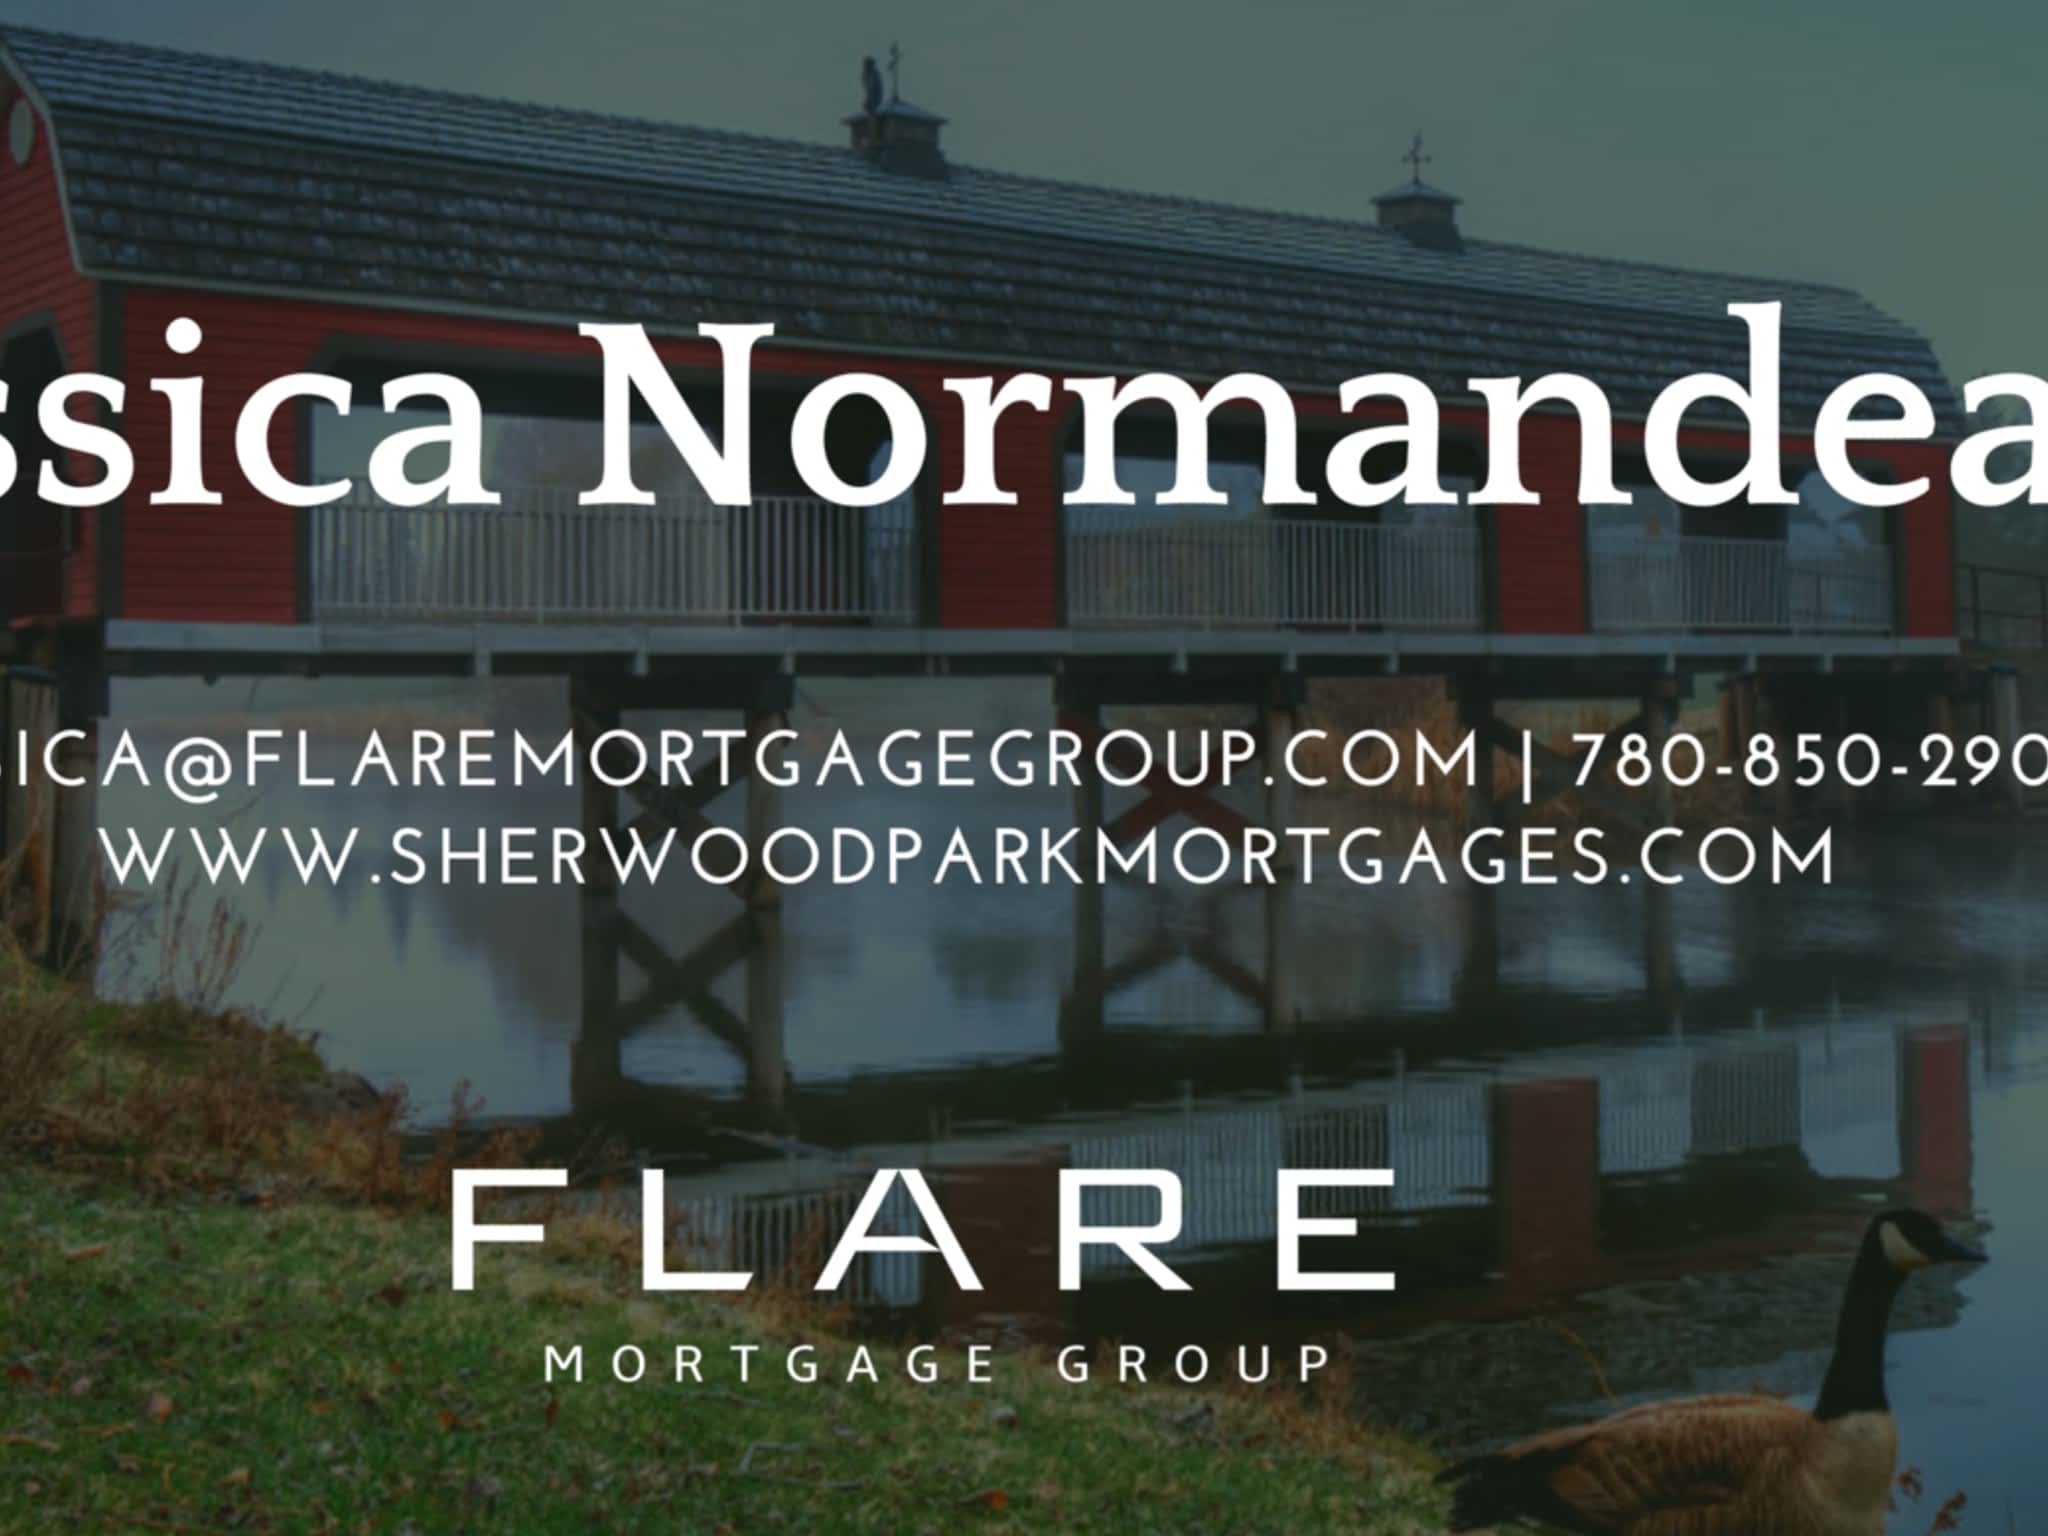 photo Jessica Normandeau - Flare Mortgage Group